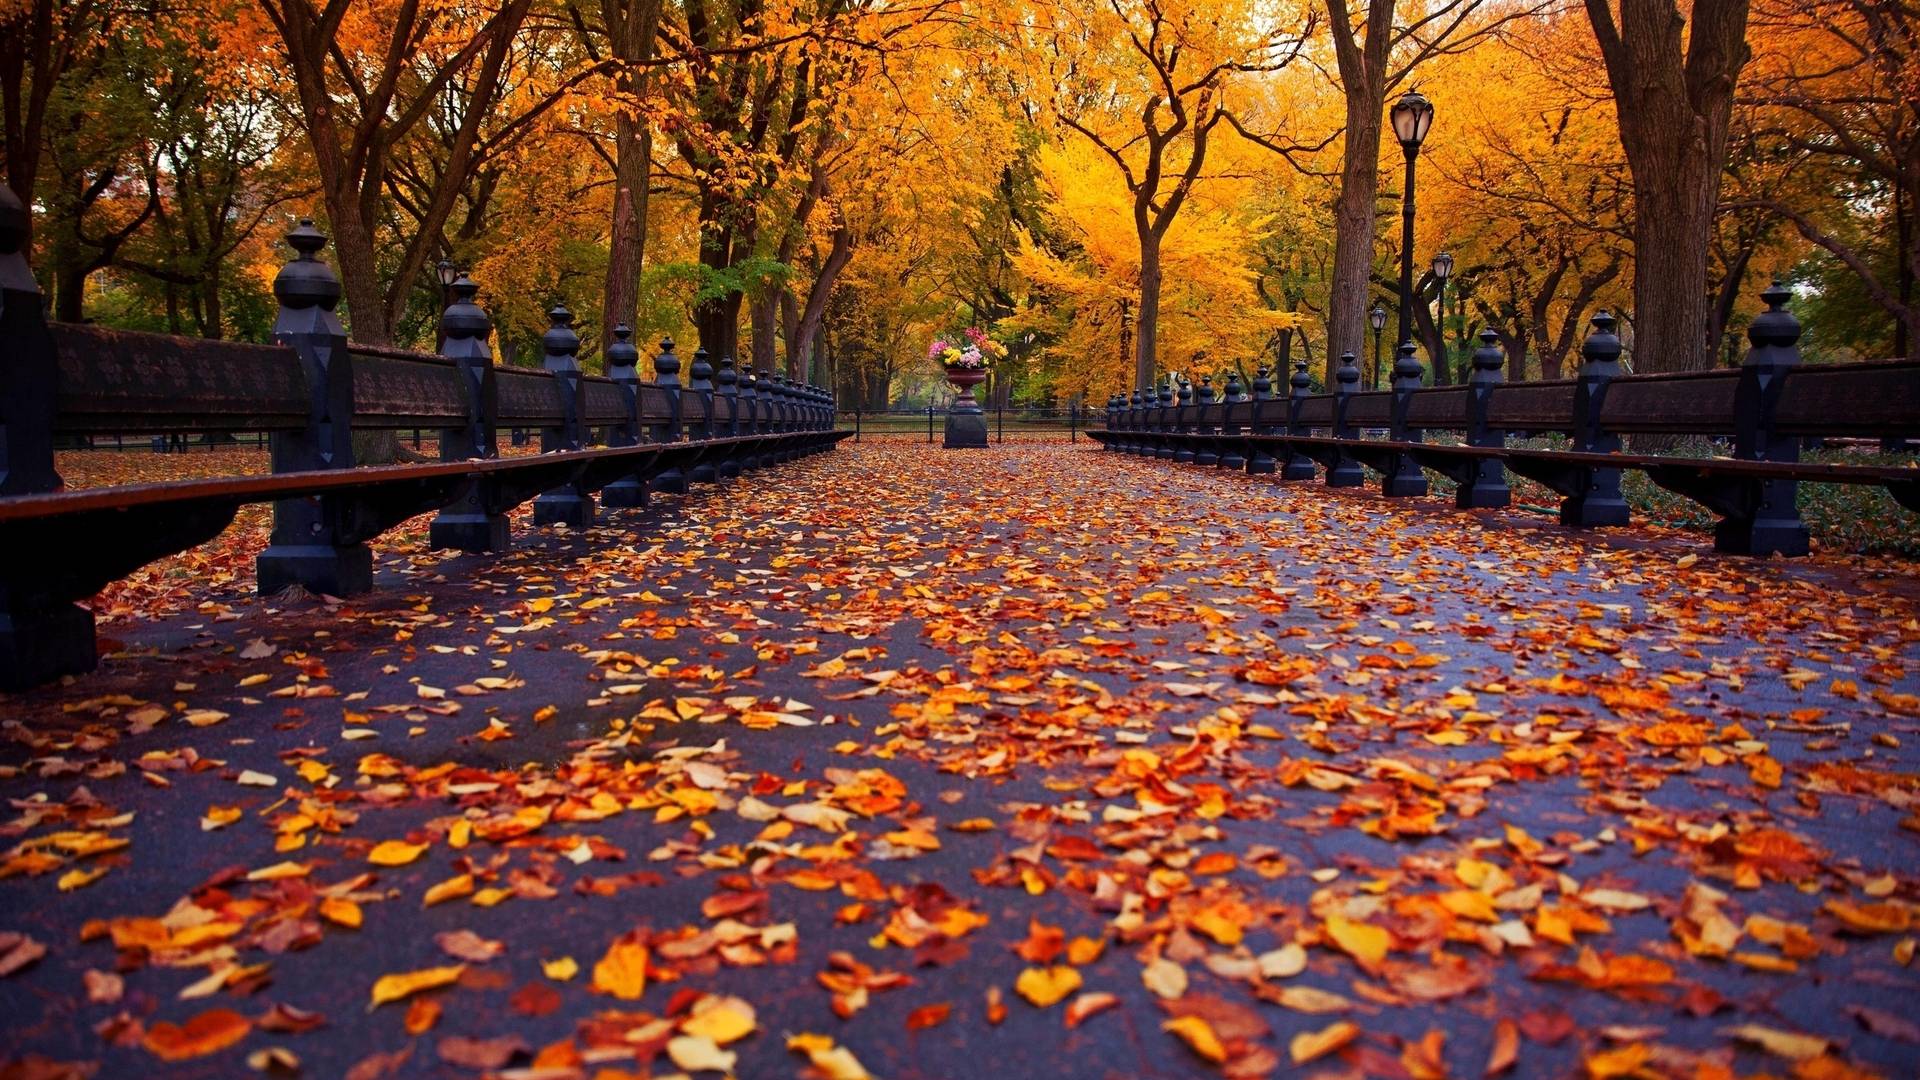 Autumn Wallpaper Images - Free Download on Freepik